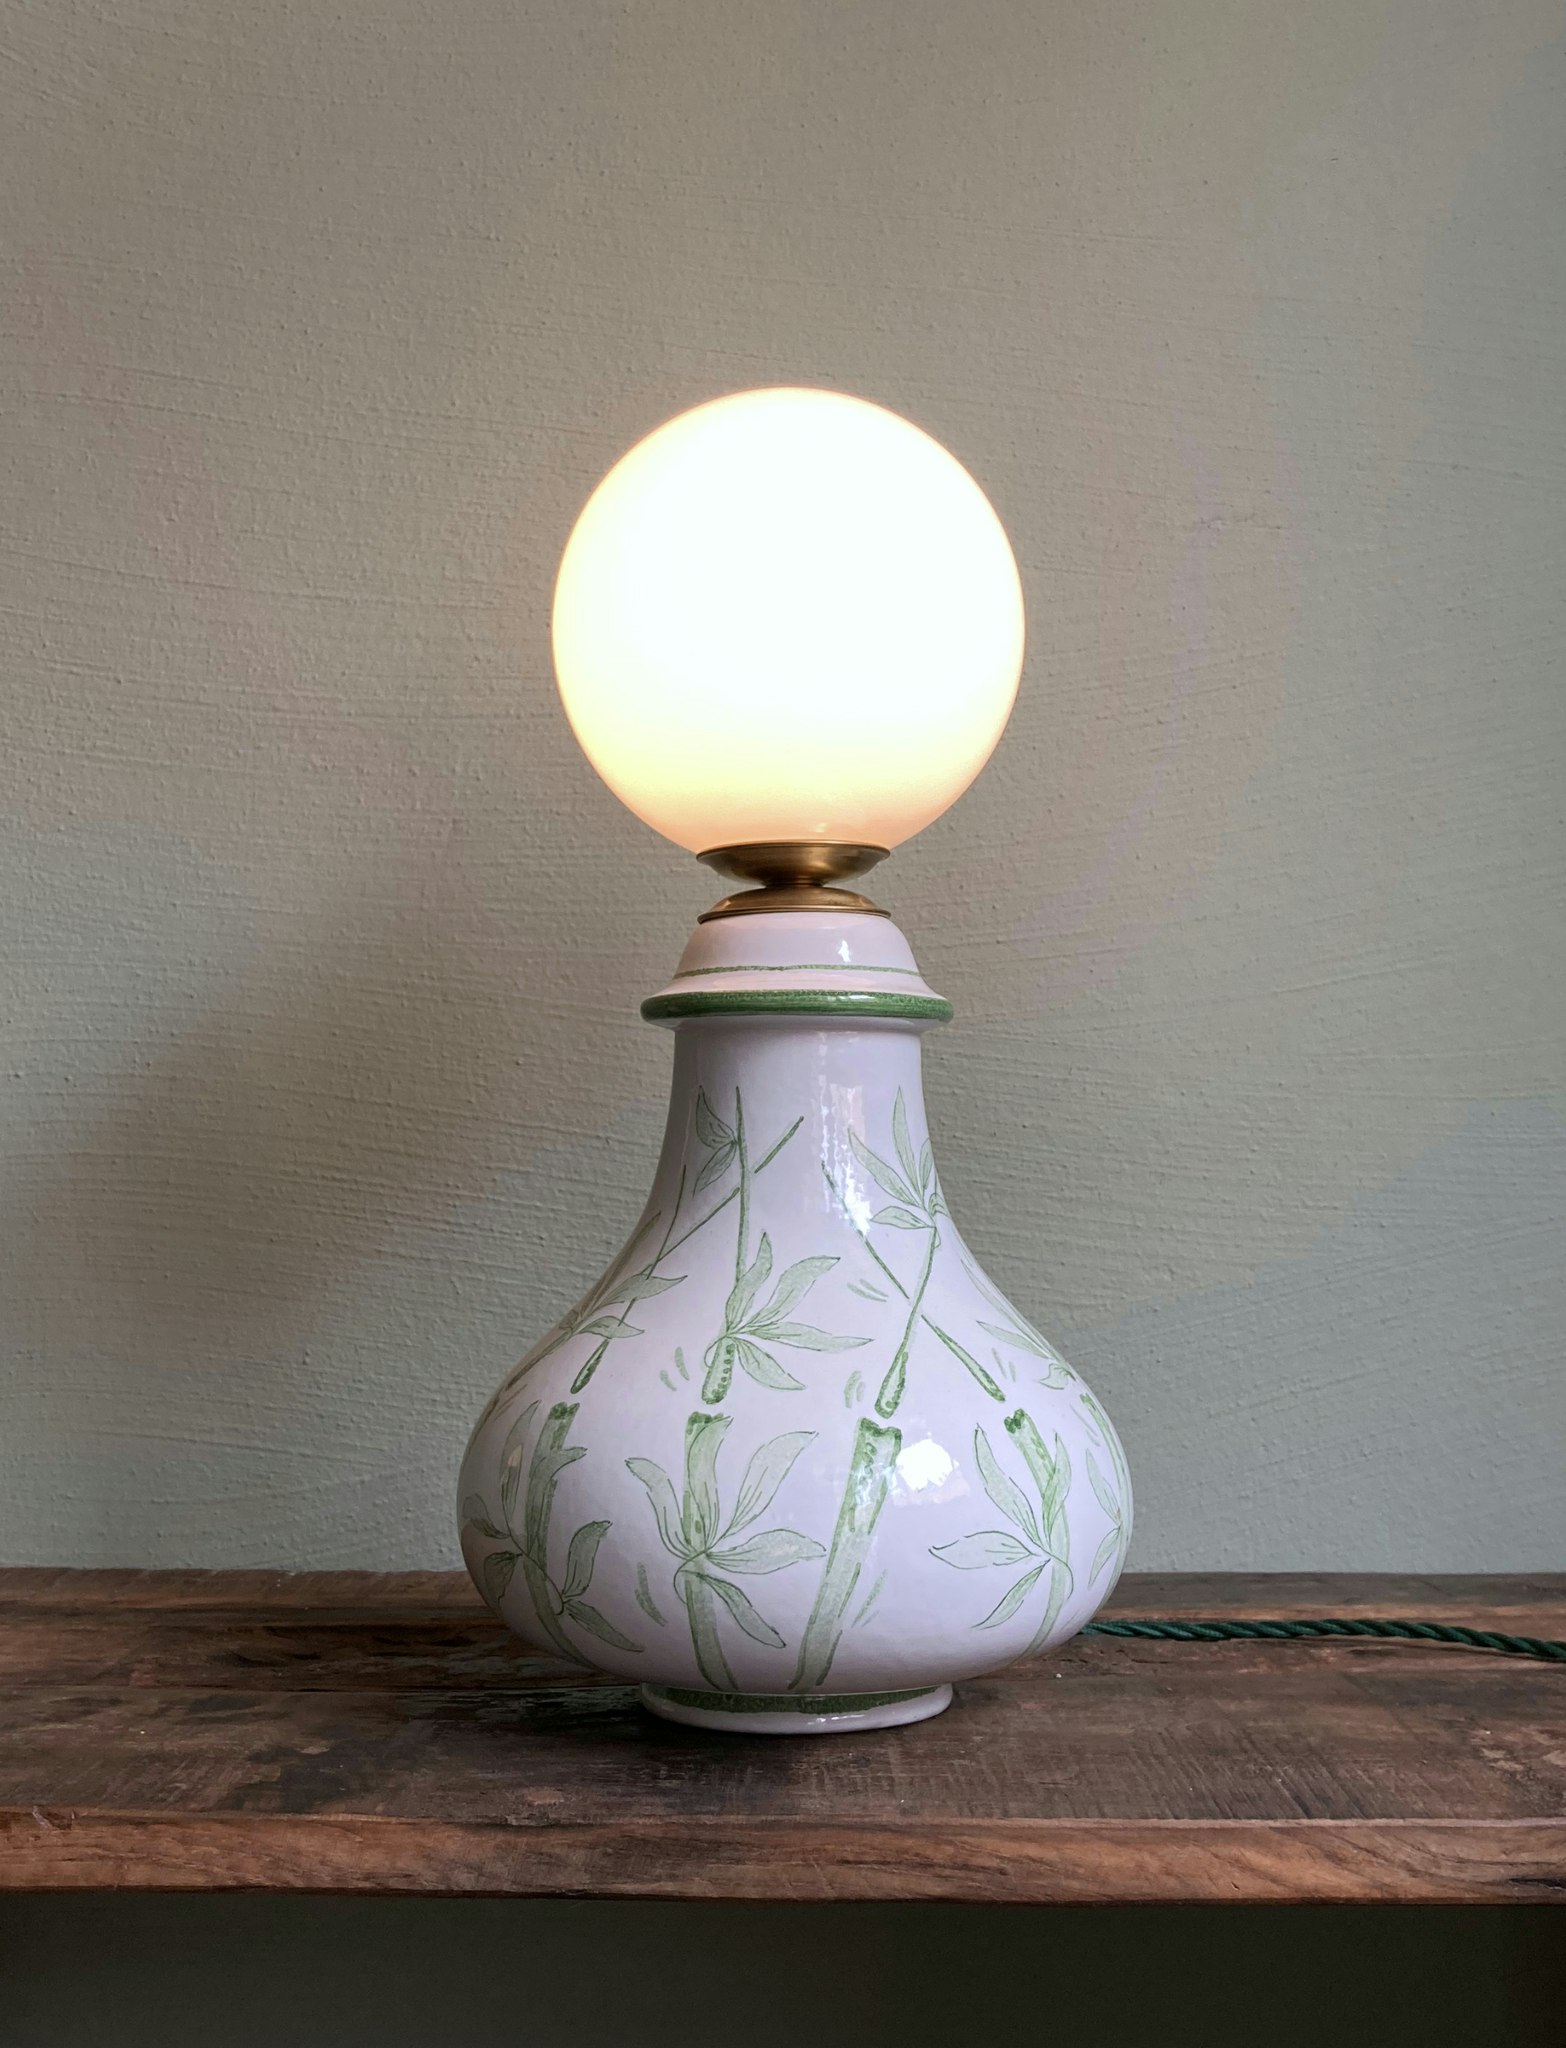 Upcycled vintage ceramic lamp